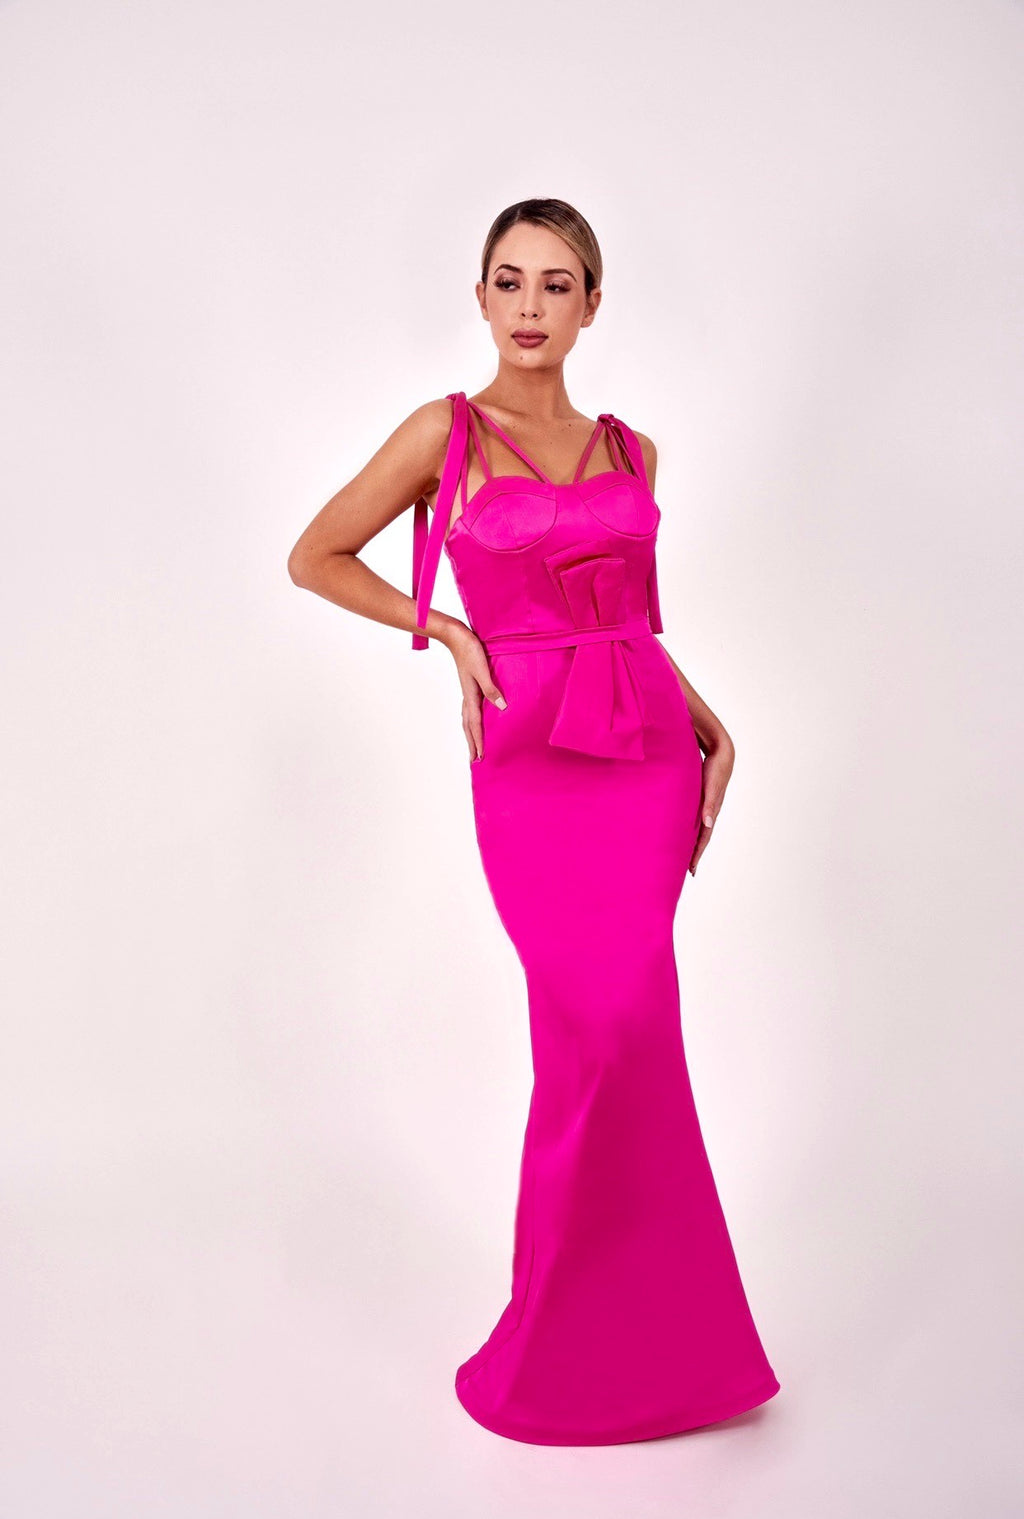 Hot pink strapless corset gown. Dress